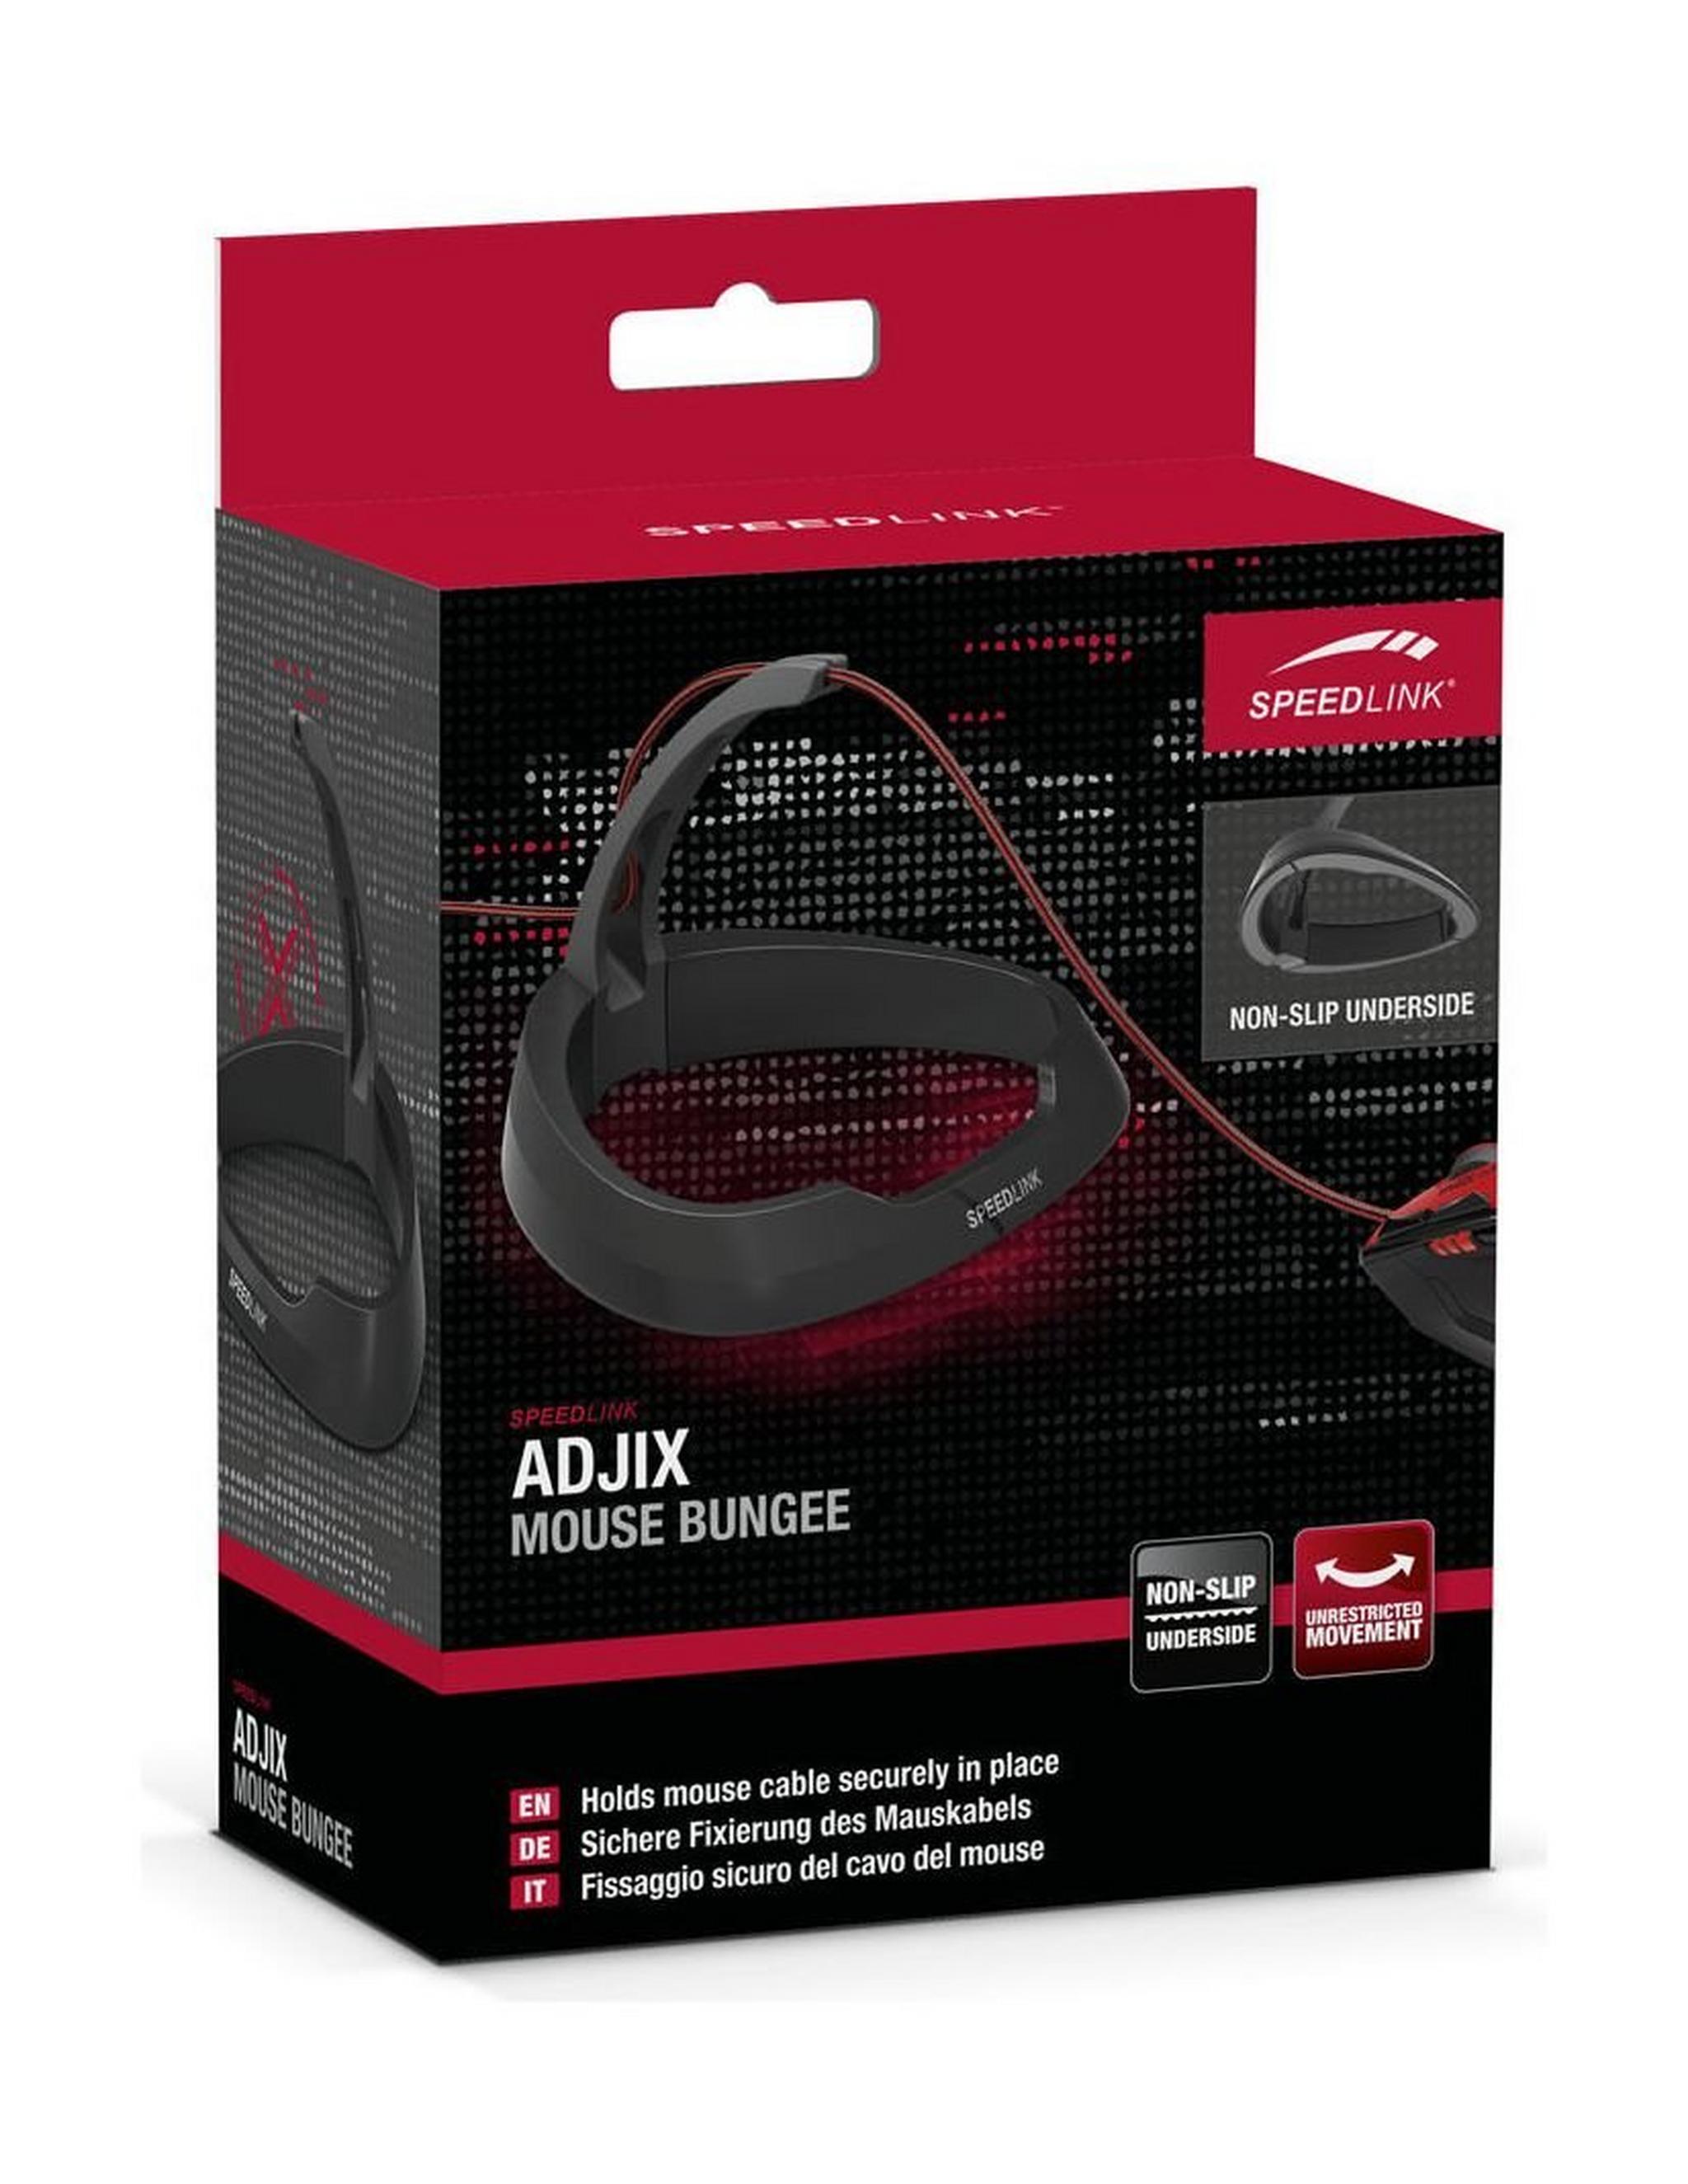 Speedlink Adjix Non-slip Mouse Bungee (SL-680200-BK) – Black